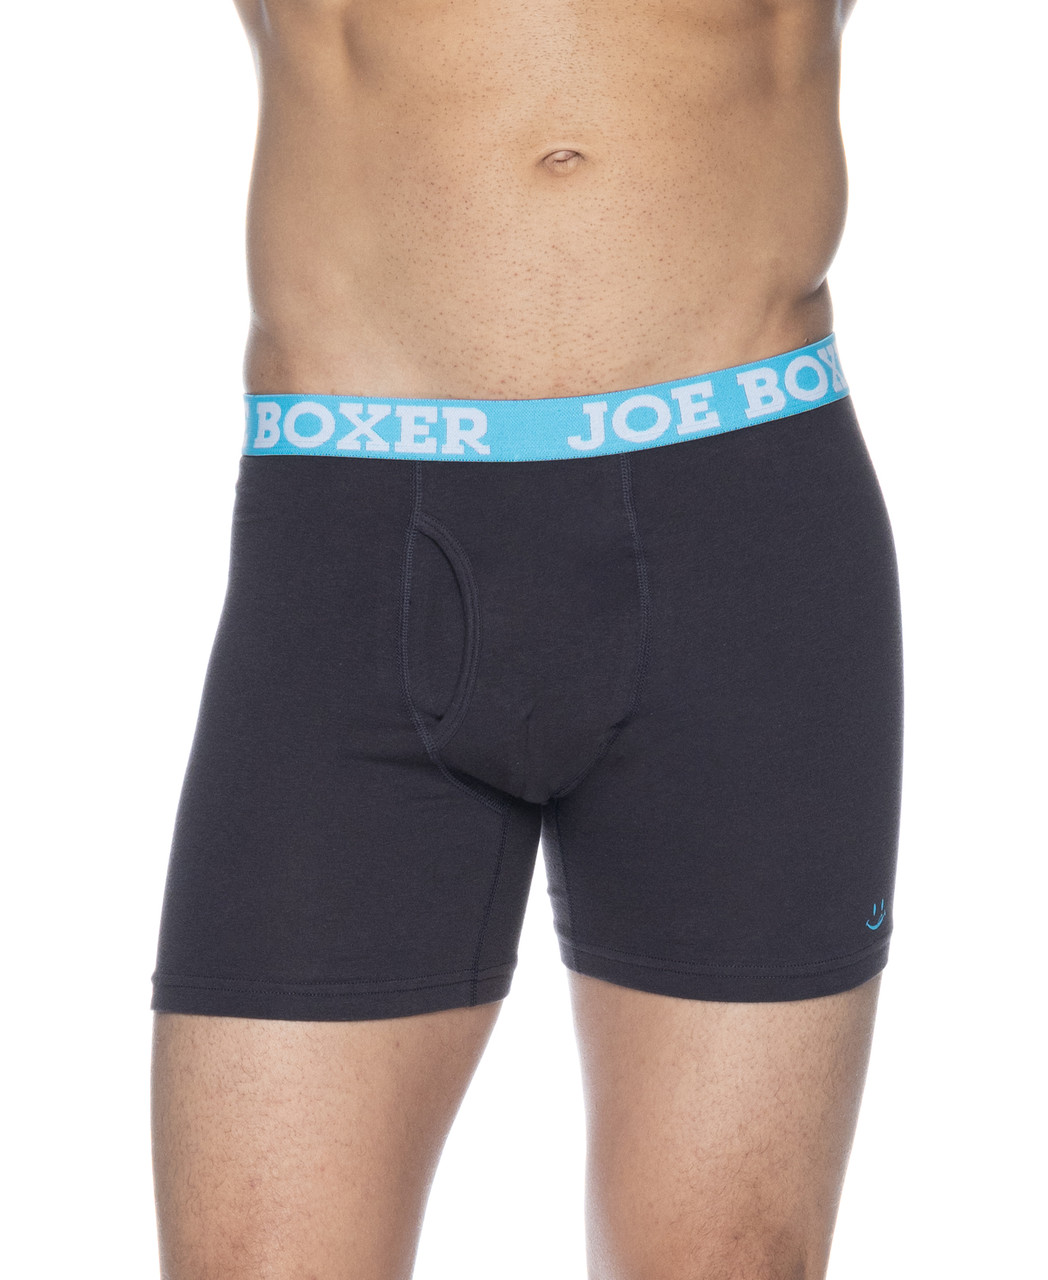 Joe Boxer Men's Boxer Briefs, Small, Grey, 4-pack, 100% Cotton 